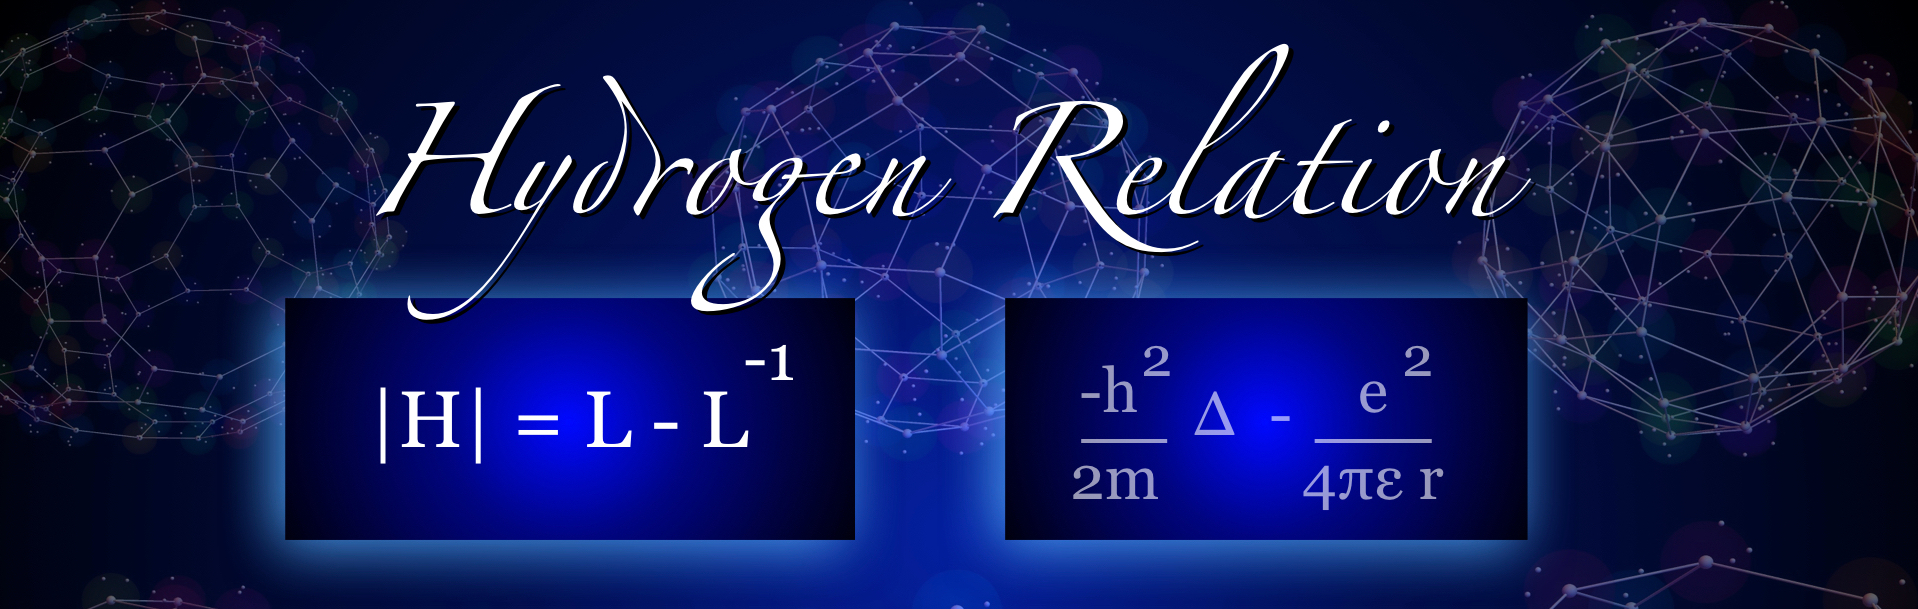 The Hydrogen Formula